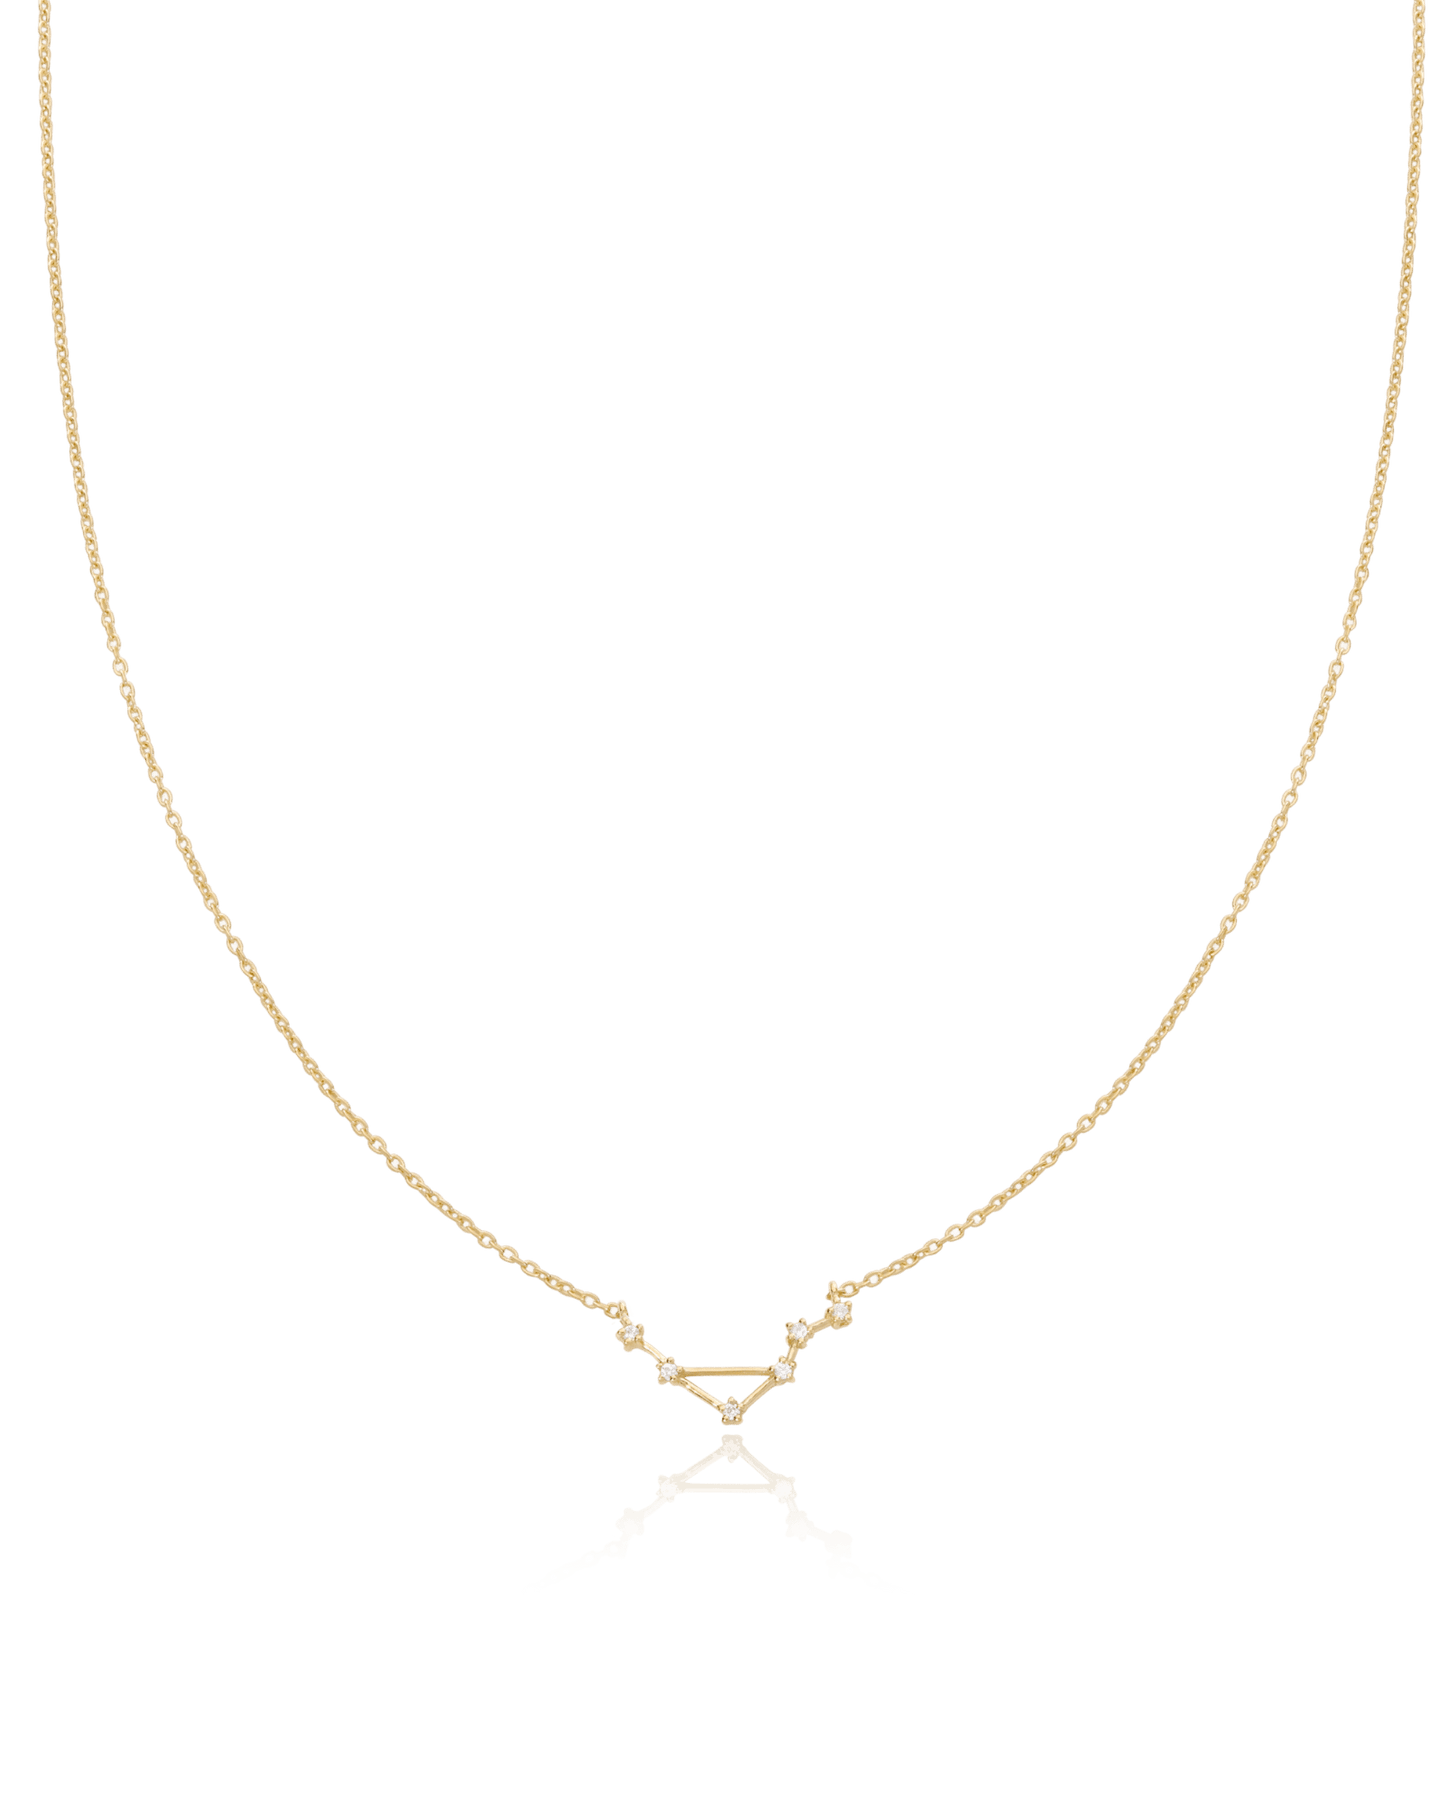 Sets of Constellation Necklaces - 18K Gold Vermeil Necklaces magal-dev 